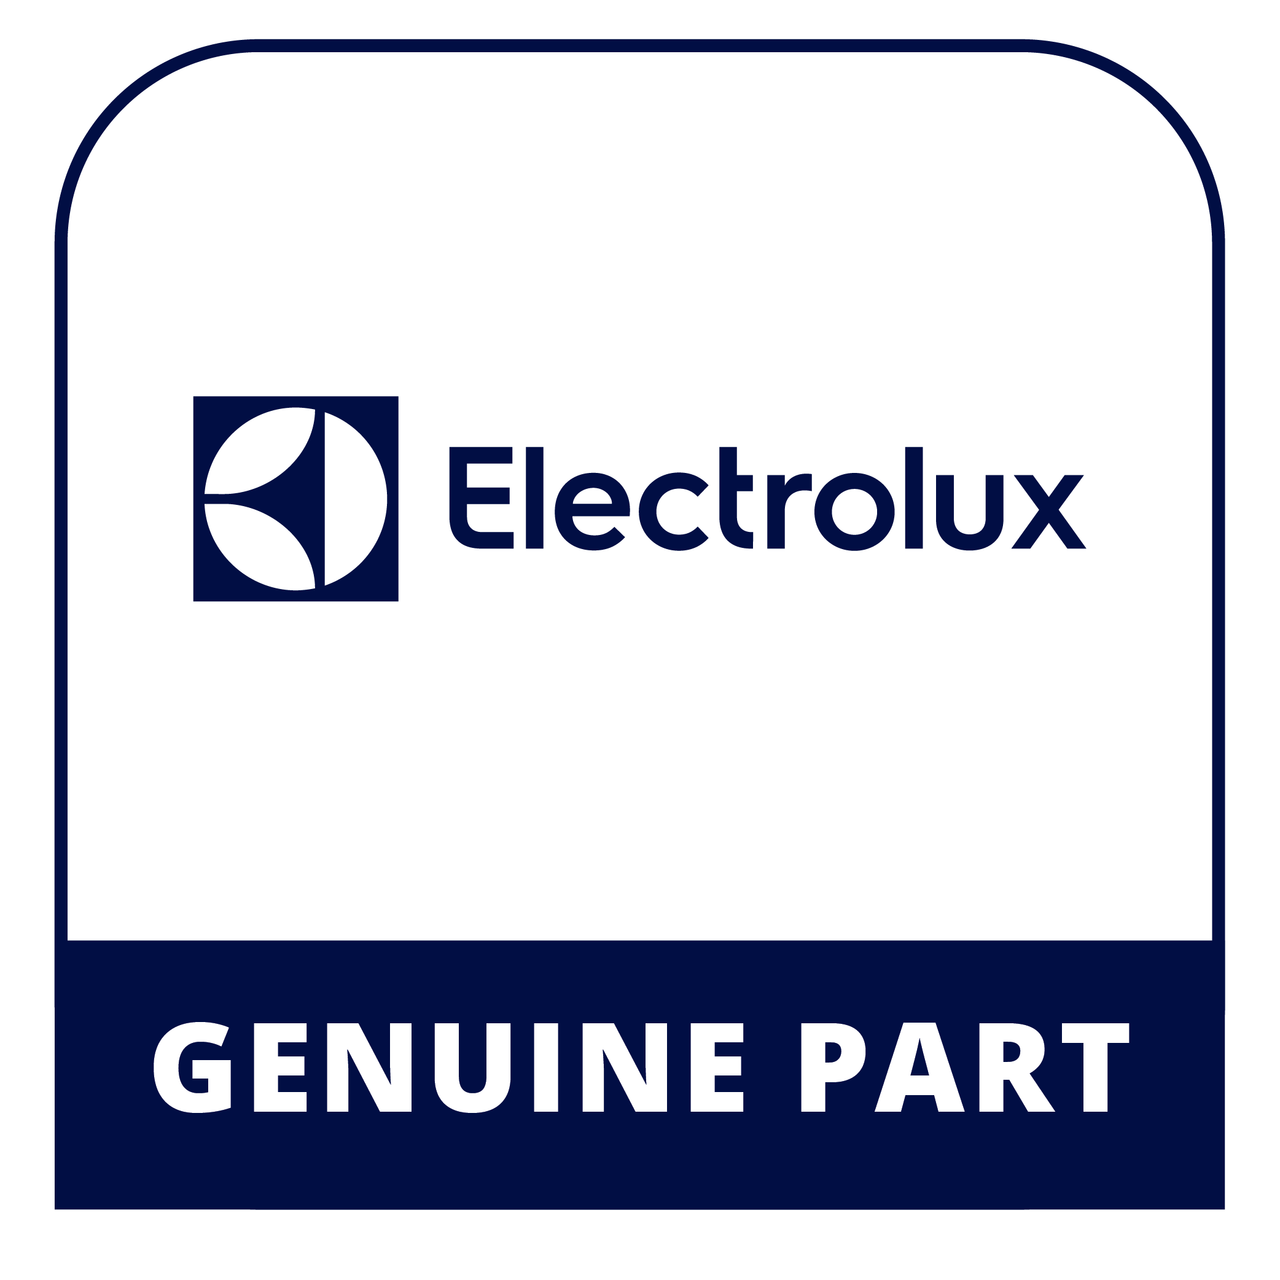 Frigidaire - Electrolux 316633004 - Overlay - Genuine Electrolux Part